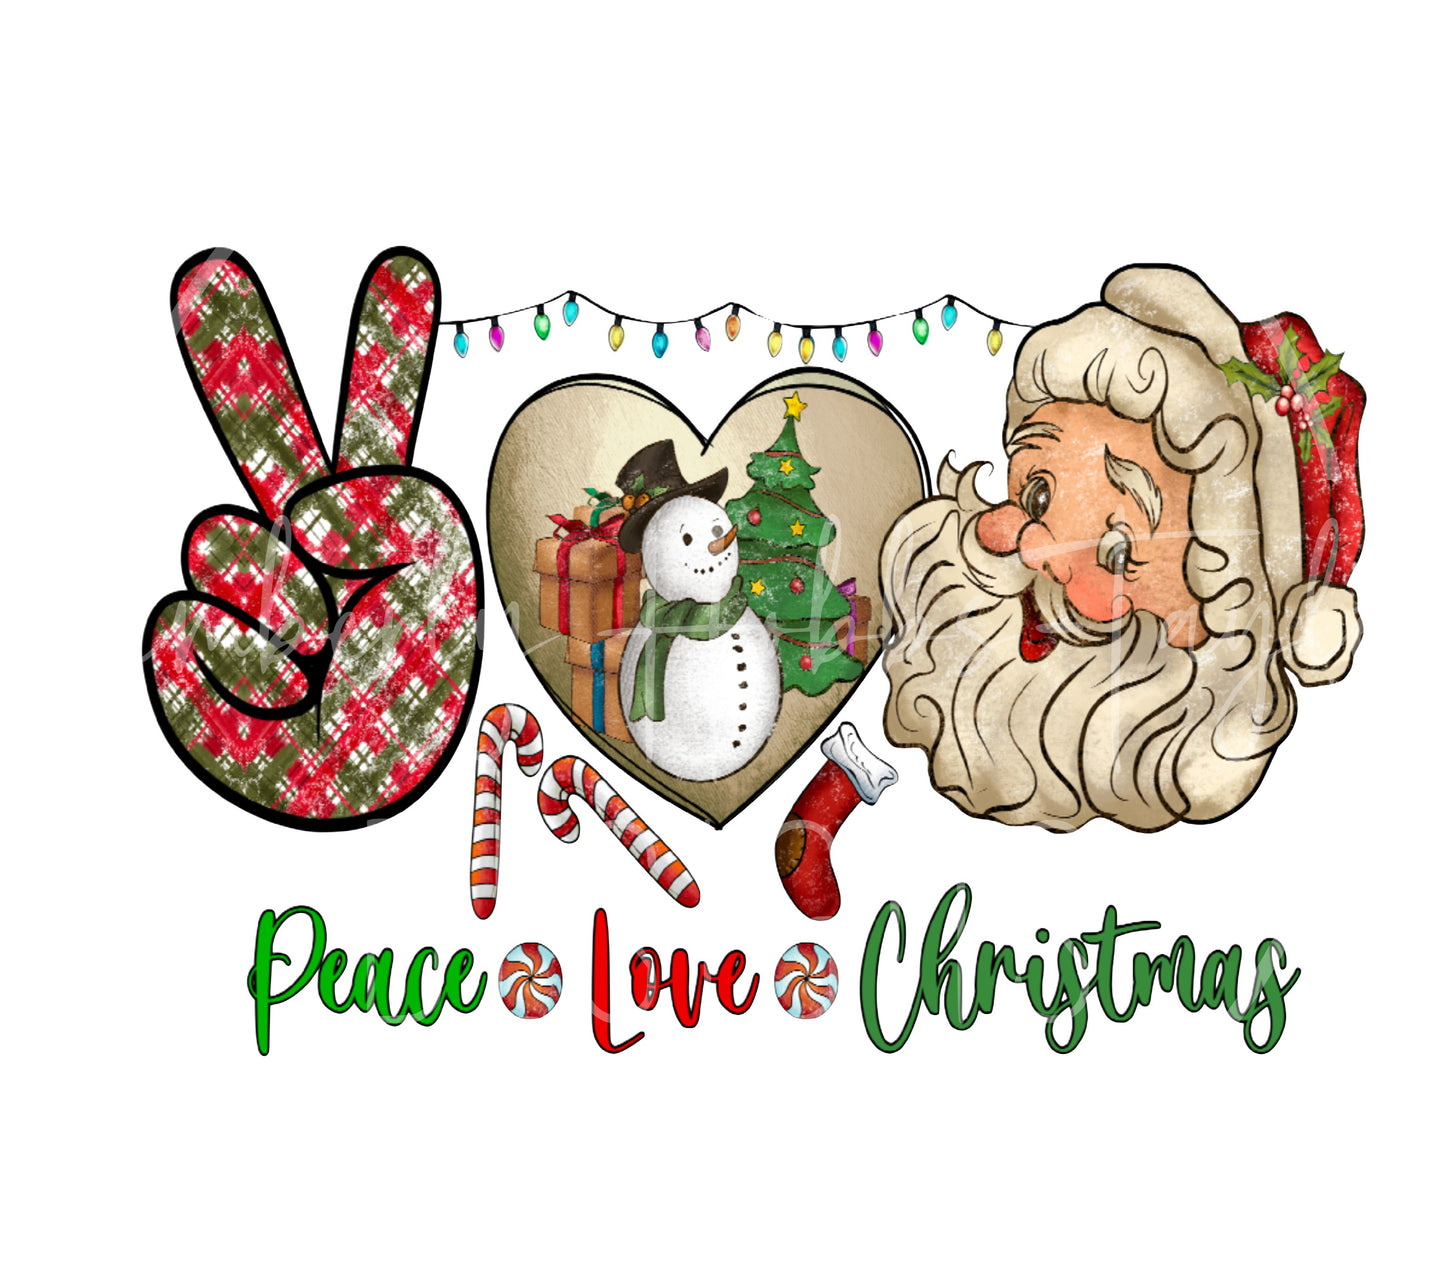 Peace Love Christmas decal